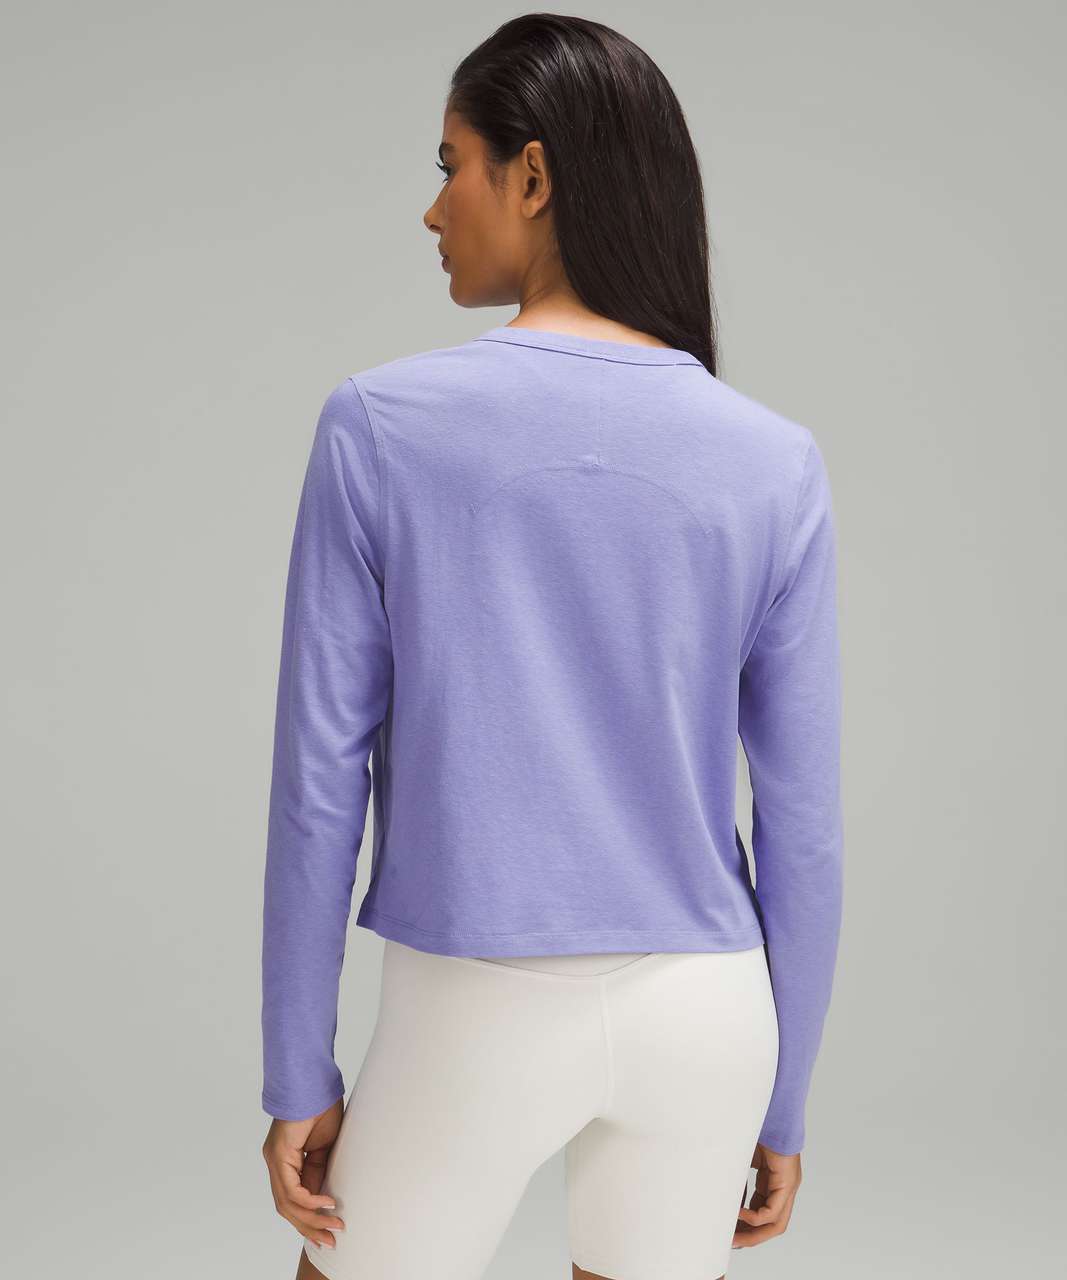 Lululemon Classic-Fit Cotton-Blend Long-Sleeve Shirt - Dark Lavender